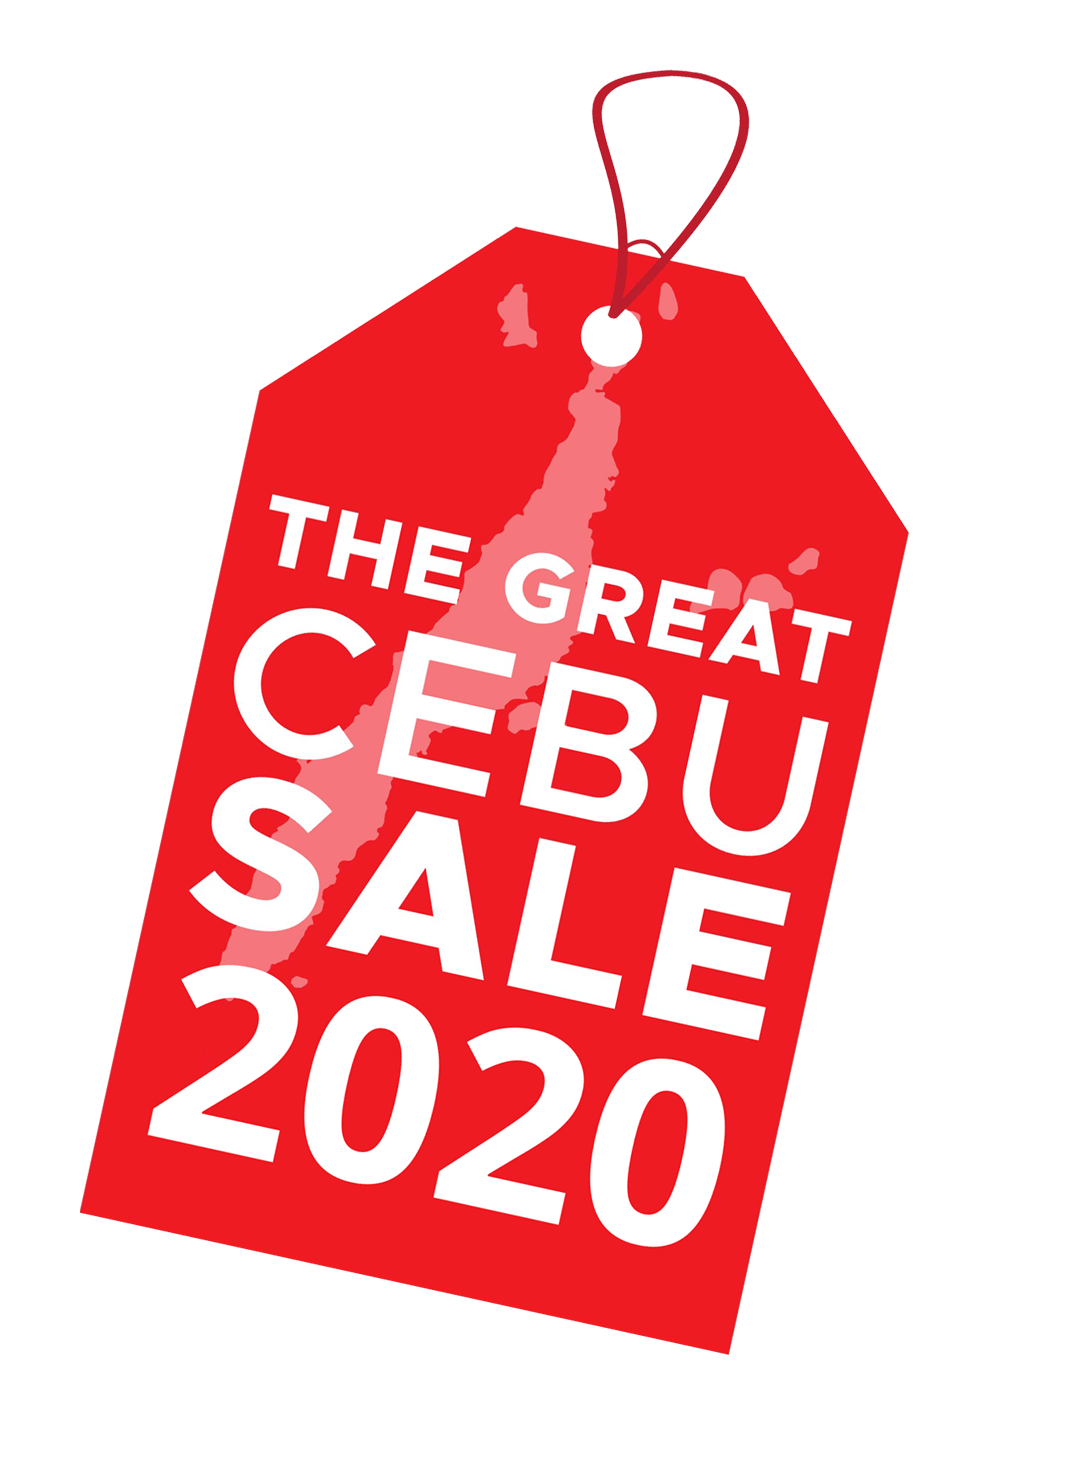 The Great Cebu Sale 2020